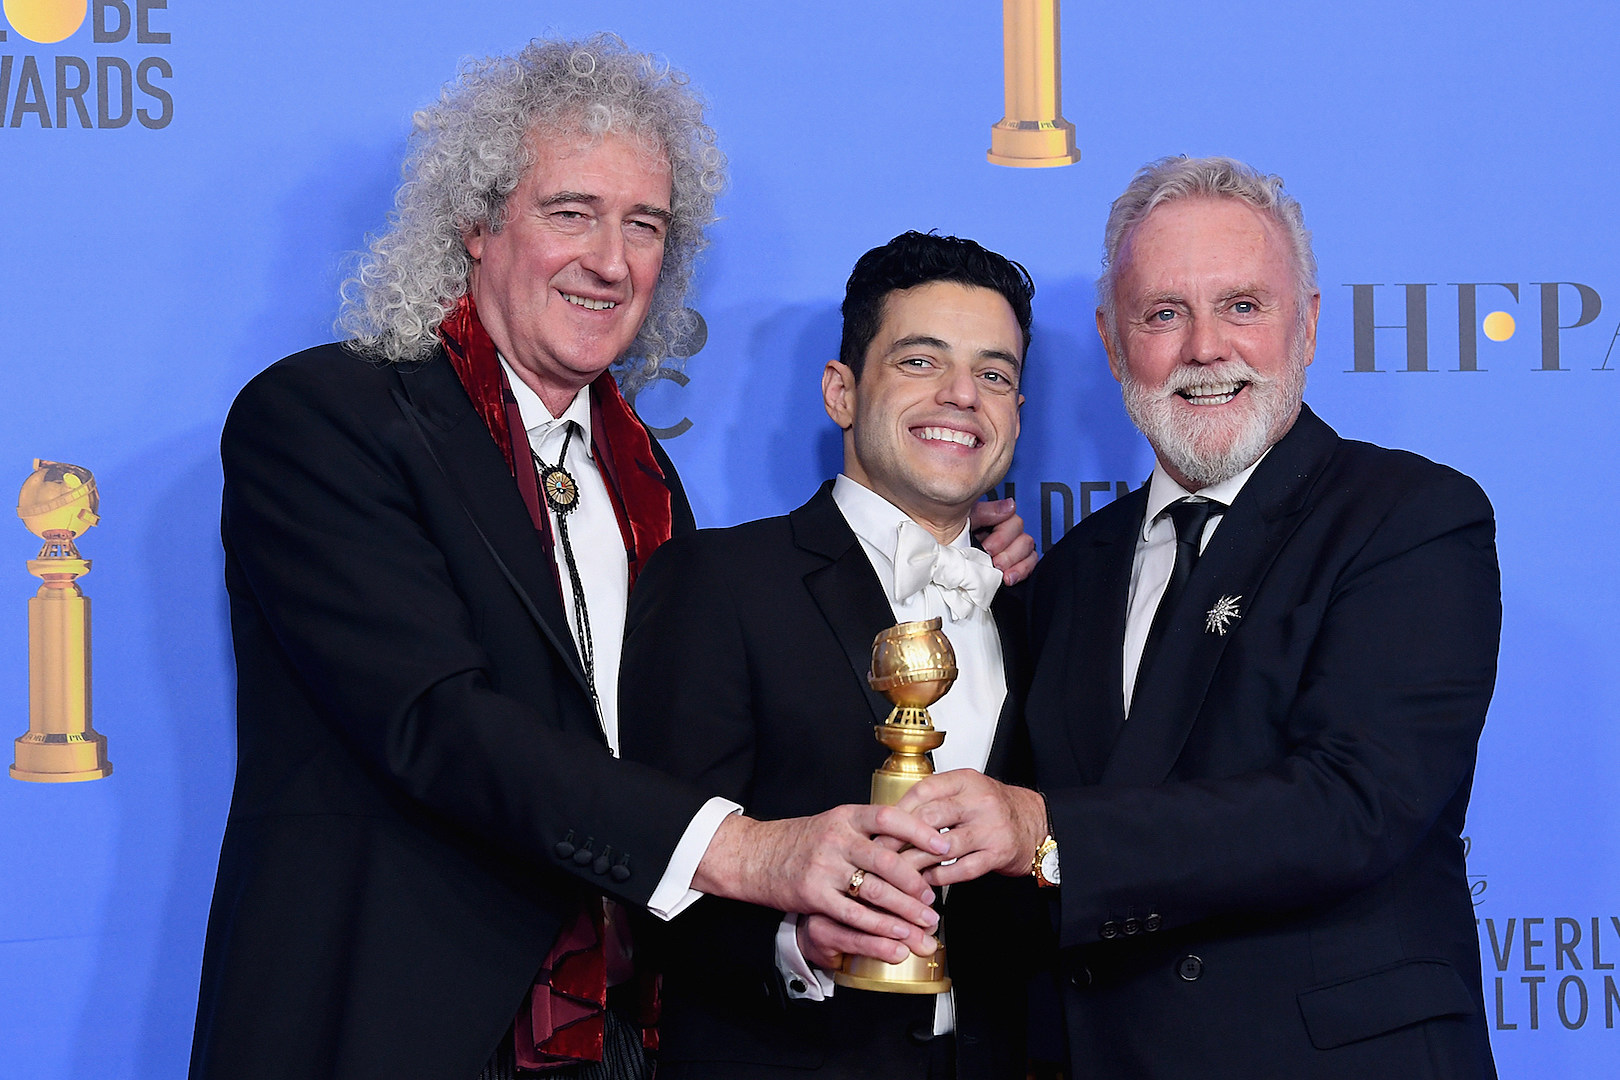 Queen Still Making Over $137K Daily From 'Bohemian Rhapsody' Film